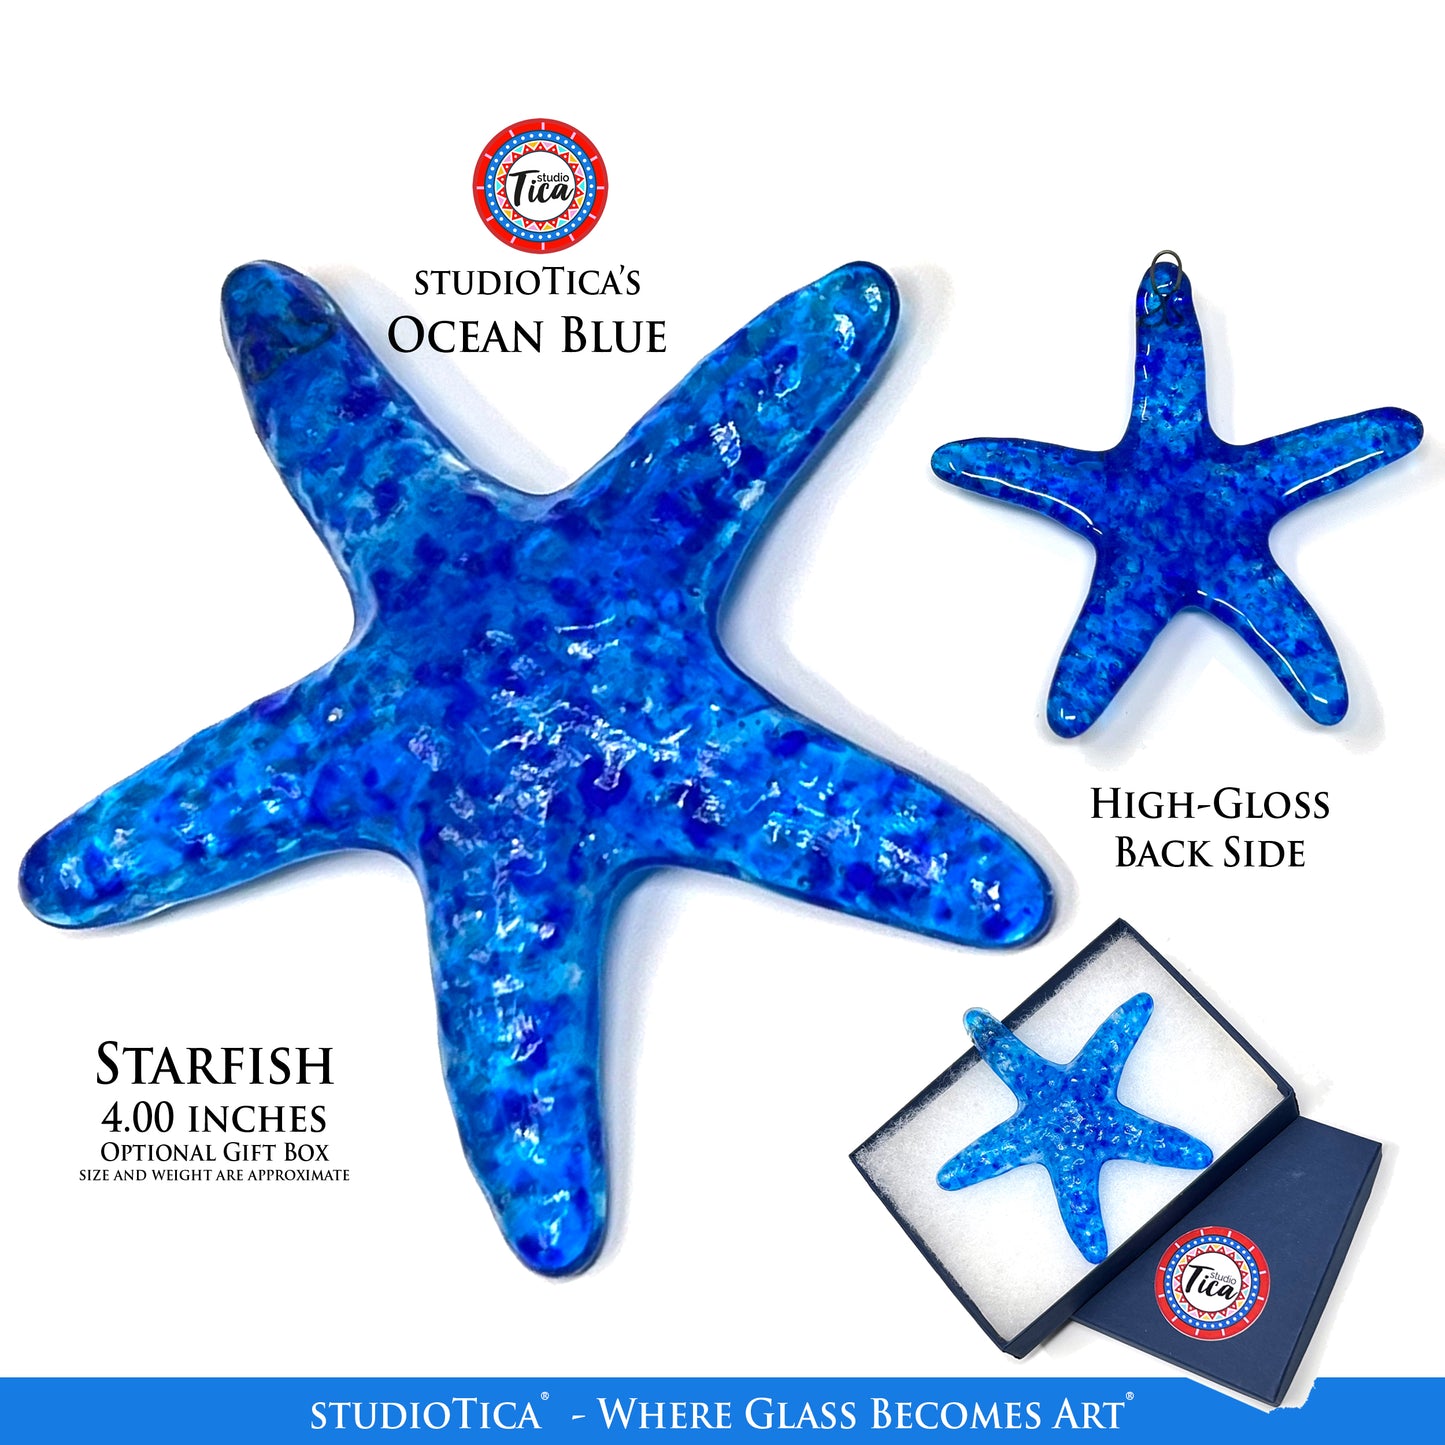 studioTica Handmade Glass Starfish - Crystal and Ocean Blue